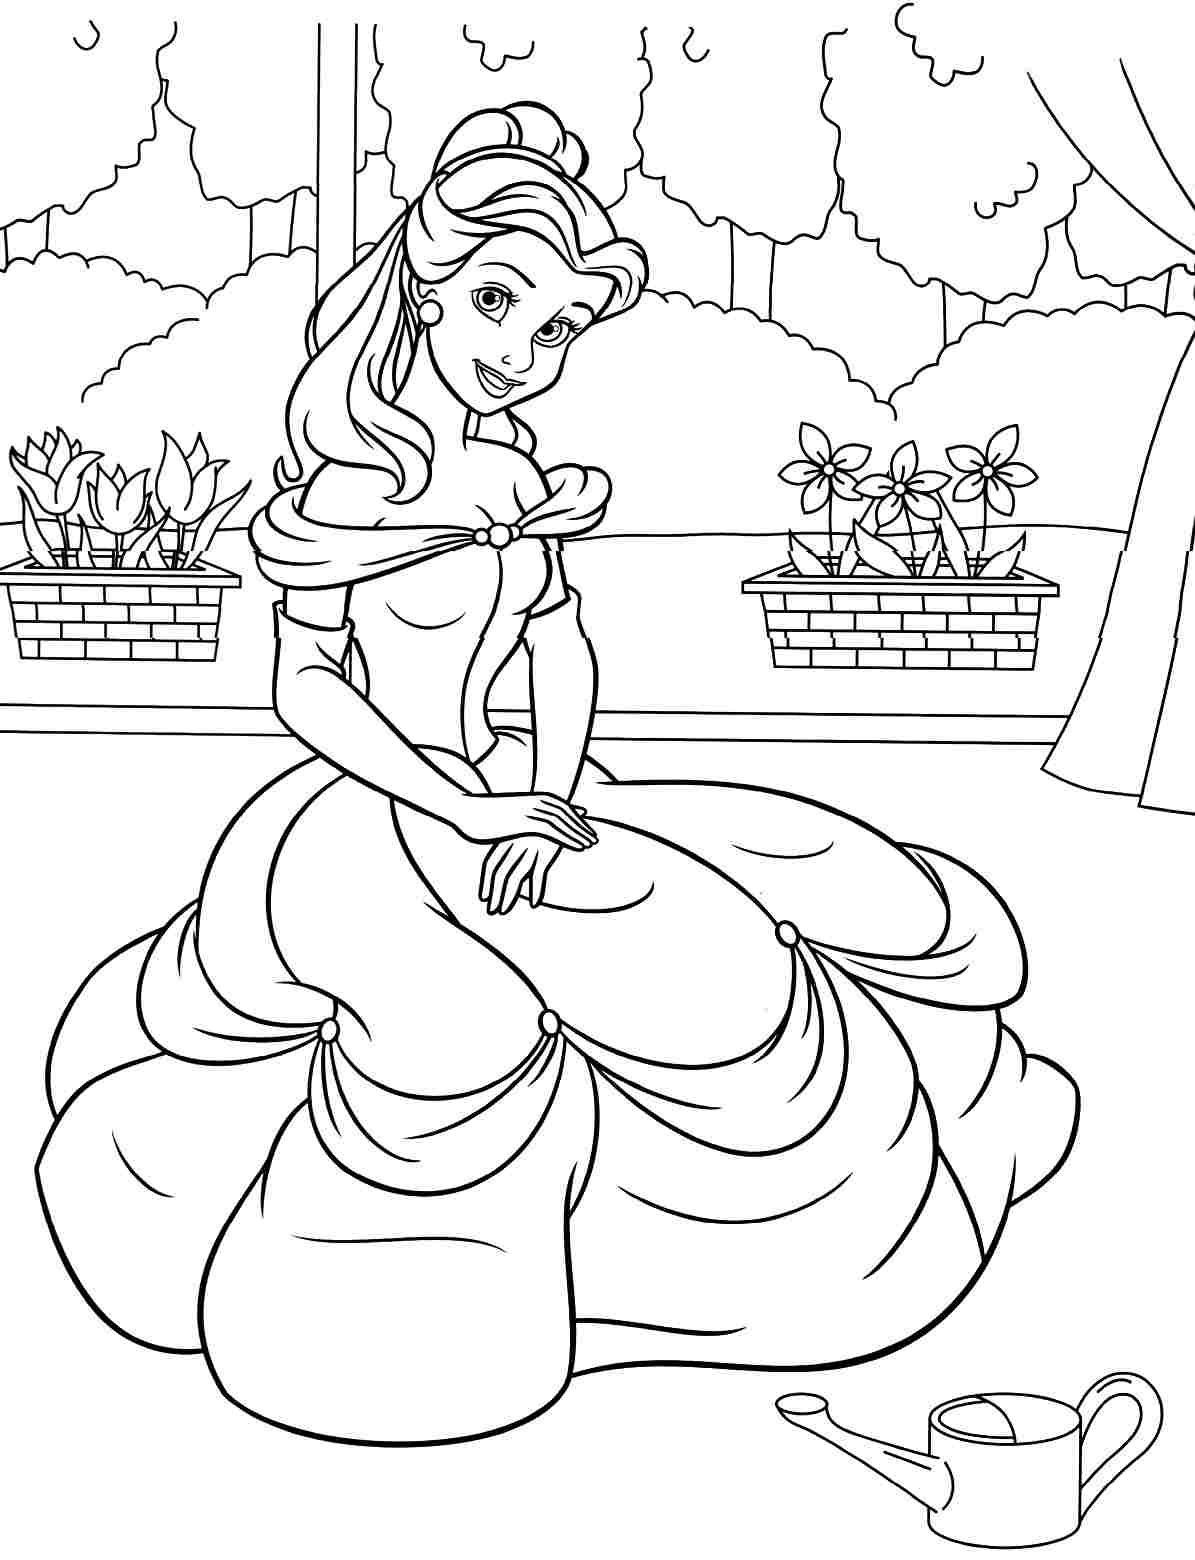 Princess Coloring Sheets For Girls
 Disney Princess Belle Coloring Pages For Girls